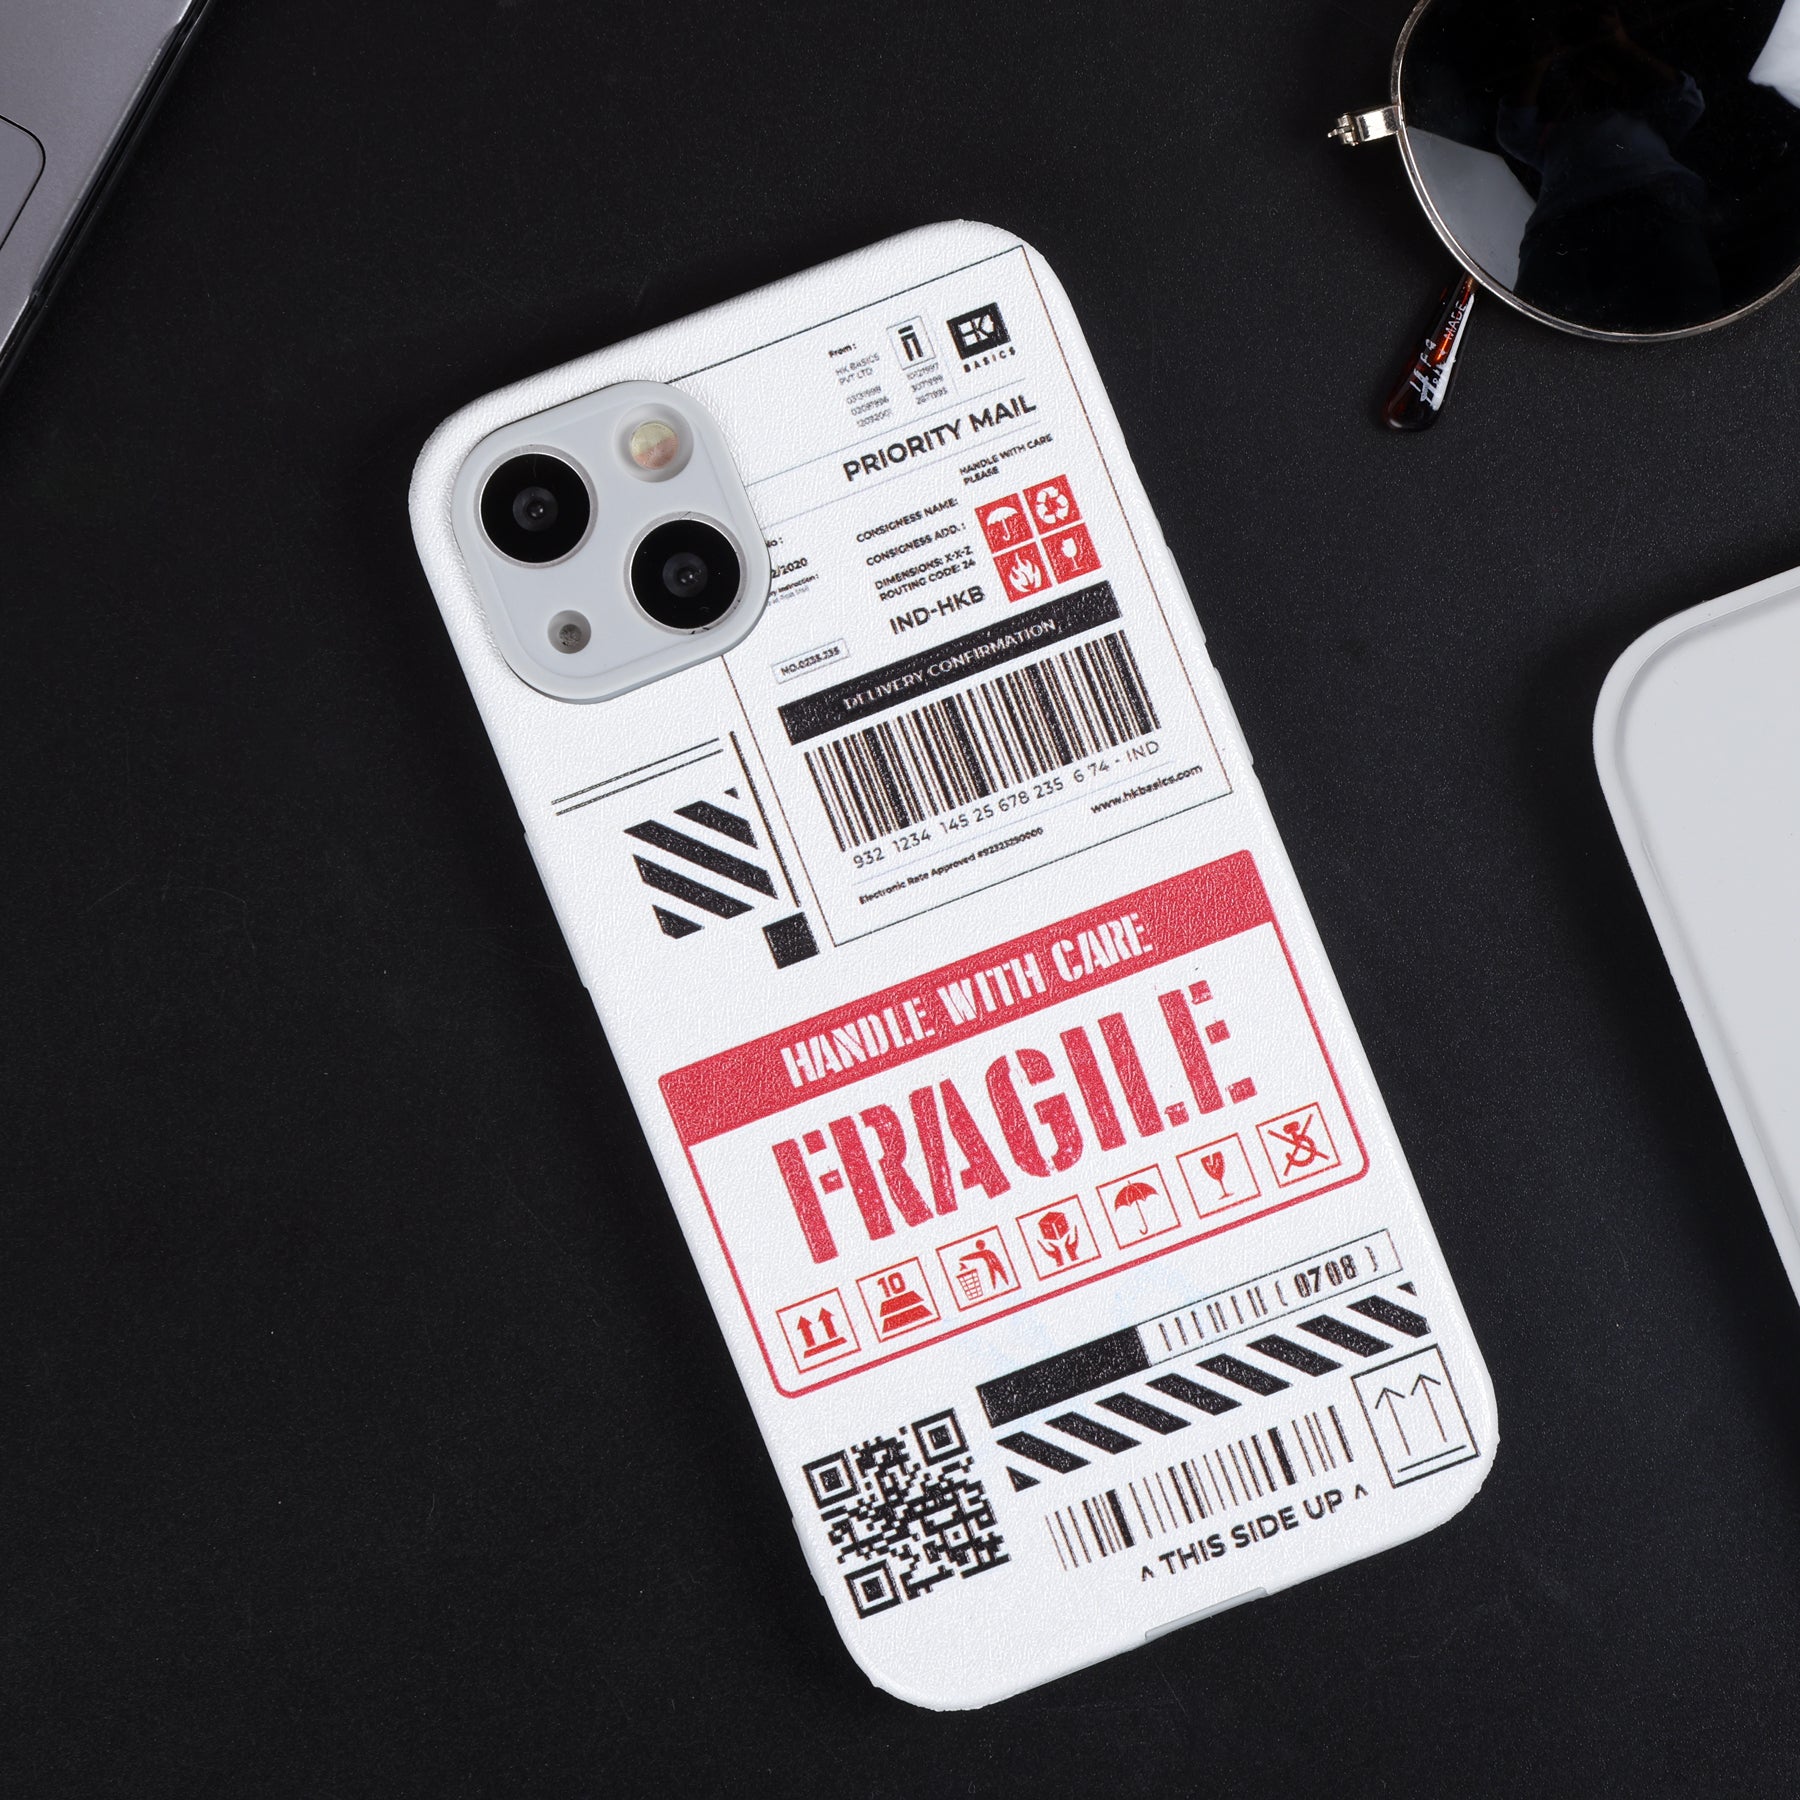 Fragile Label iPhone Case